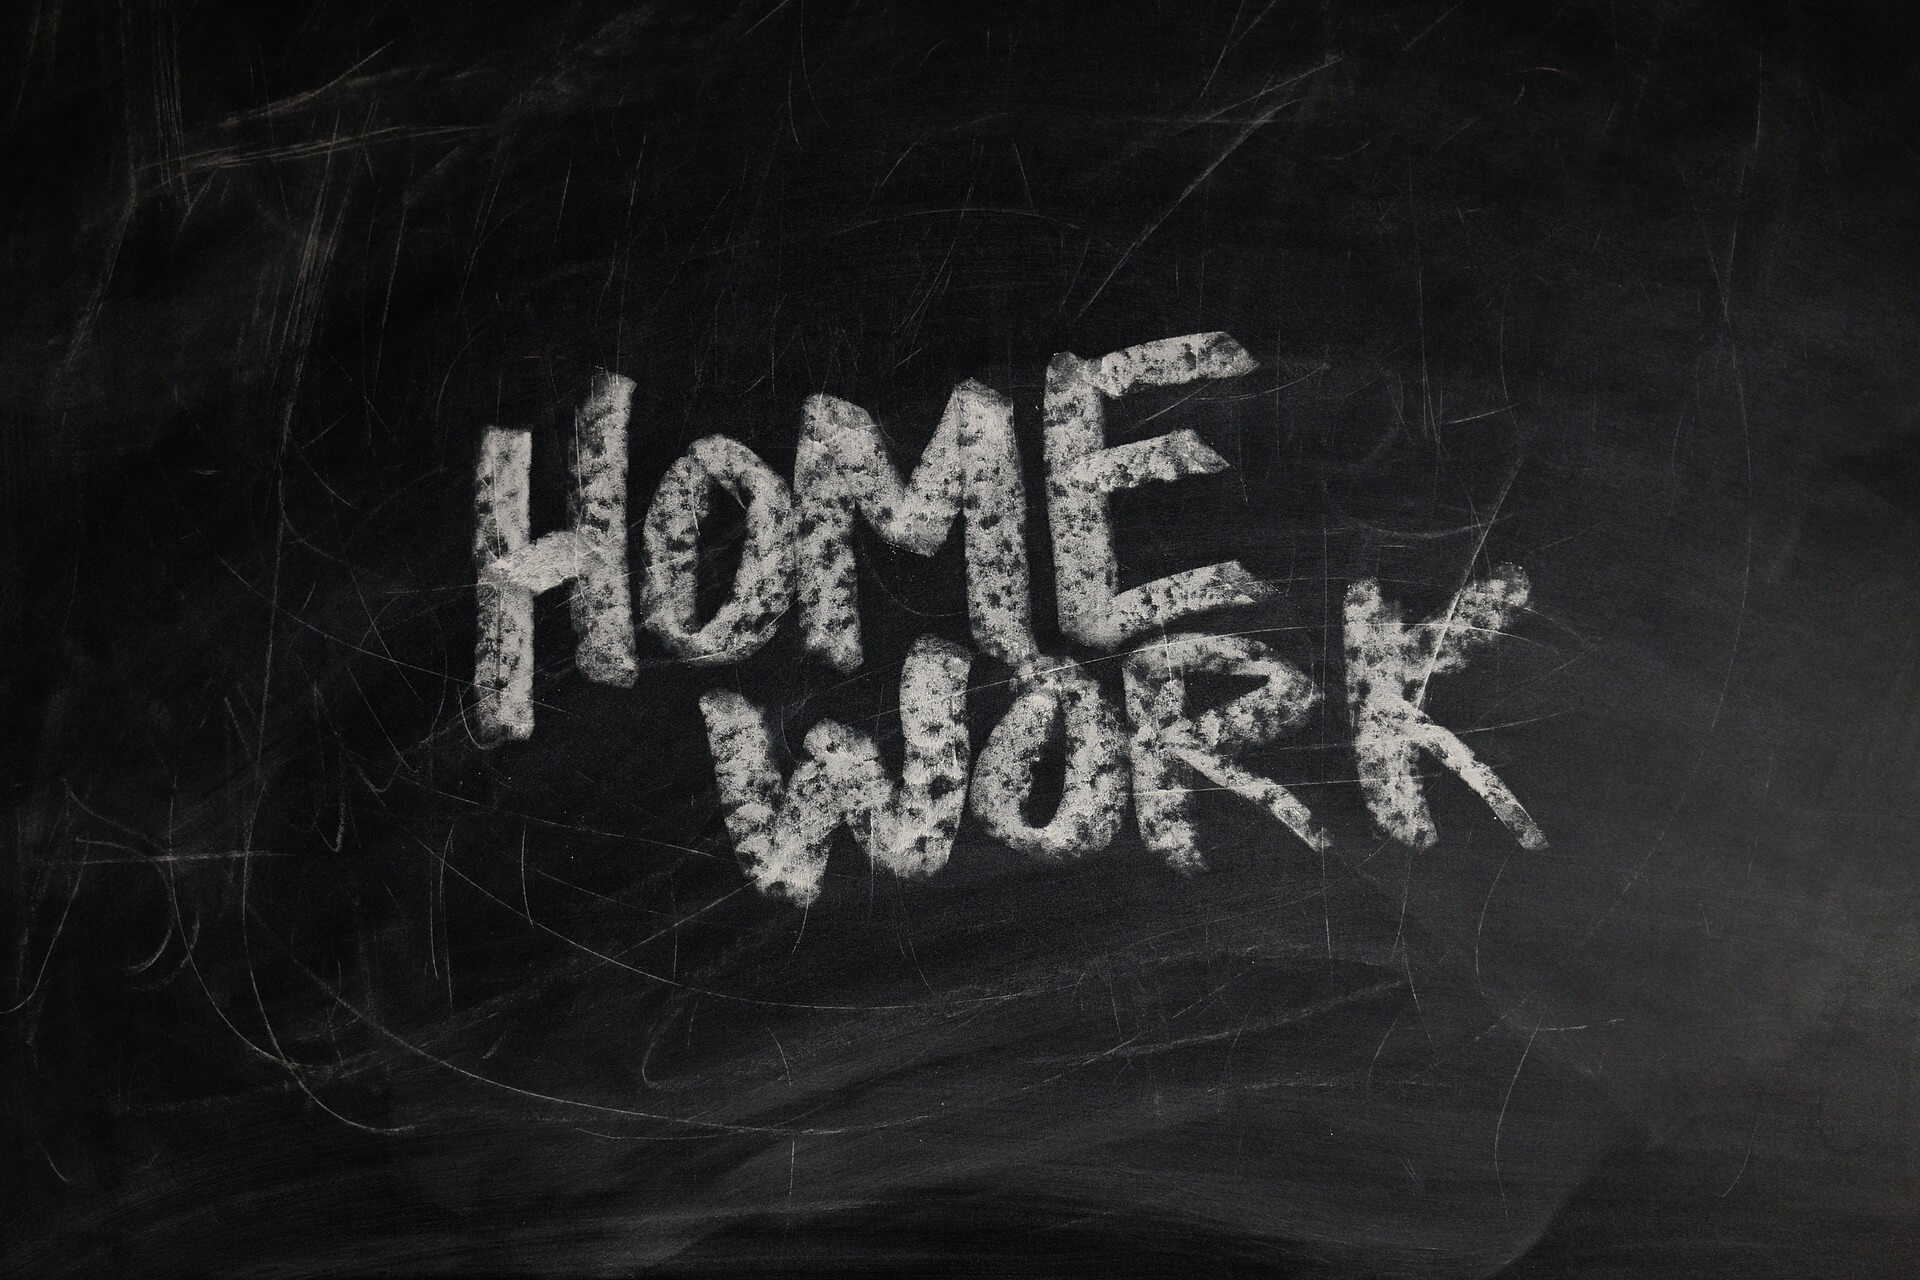 A blackboard background with "home work" written on it in white chalk